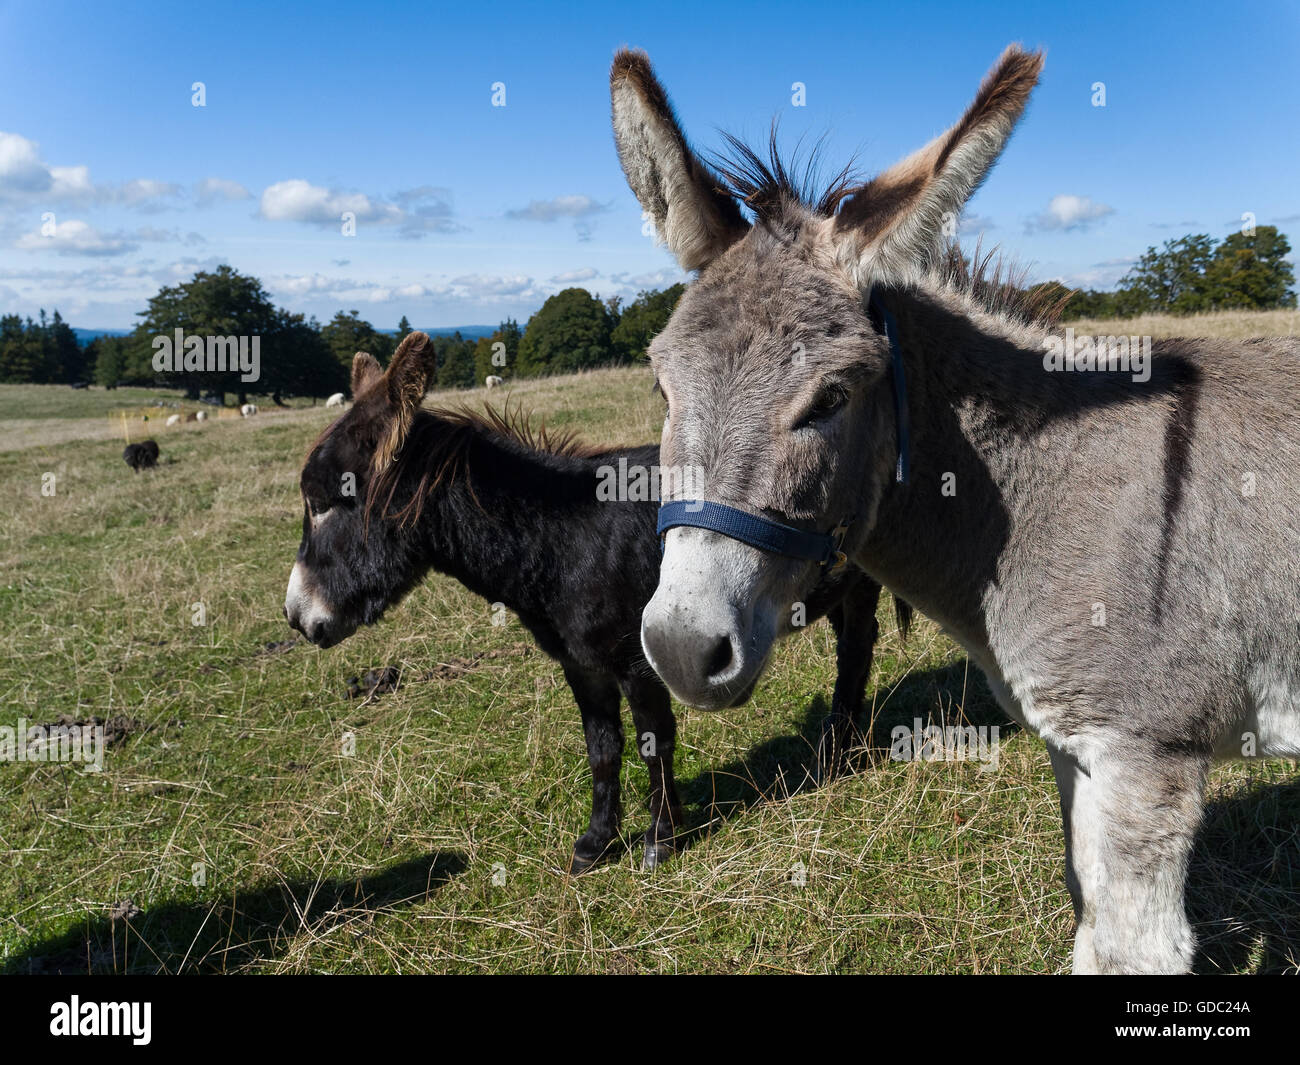 On a donkey pasture Stock Photo